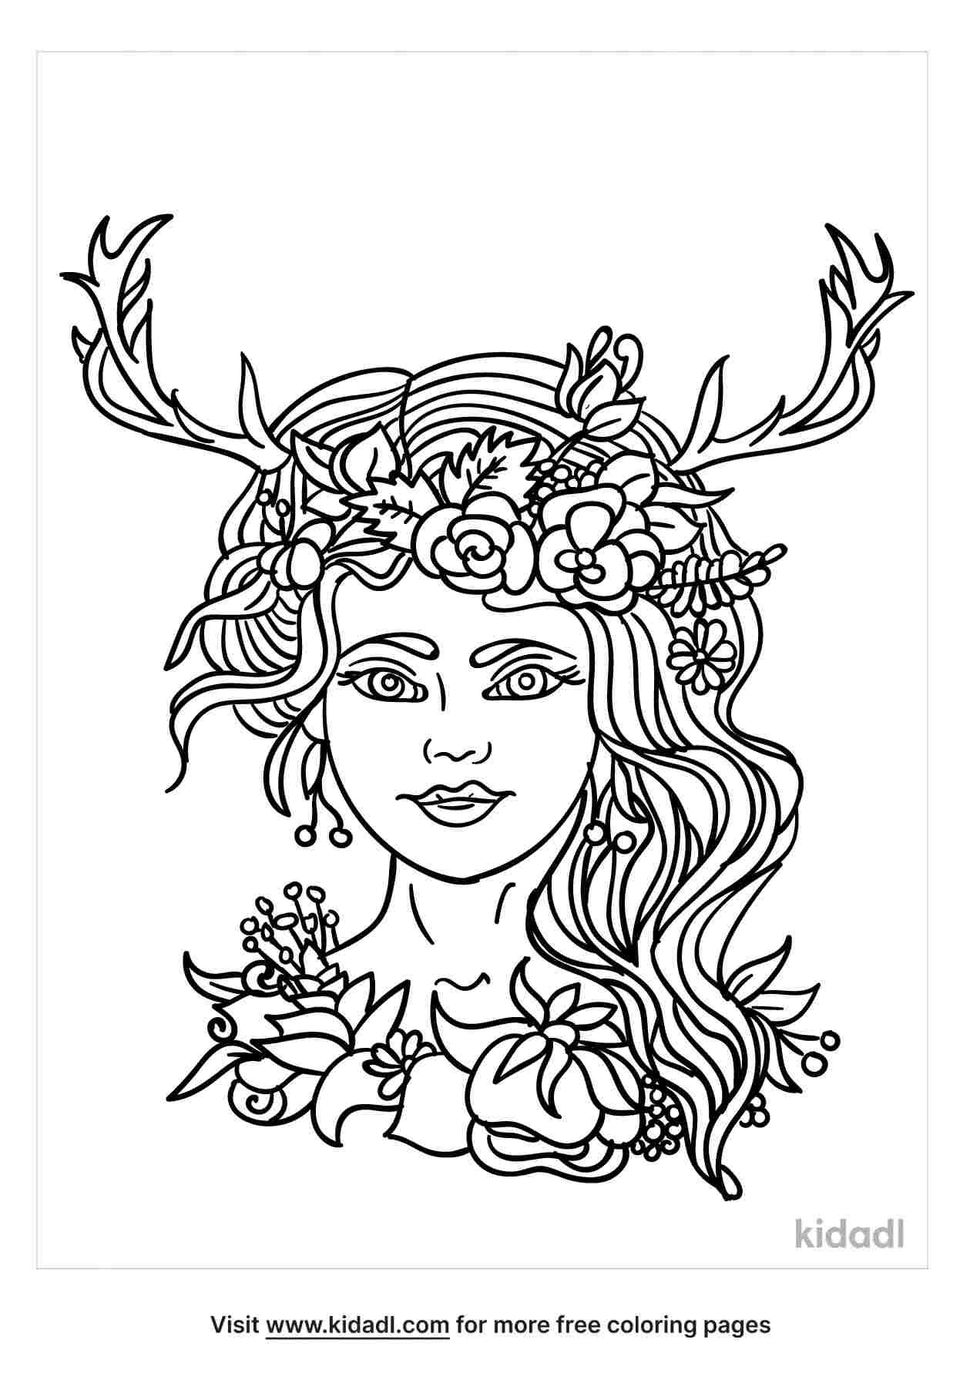 Deer Goddess coloring page for kids.